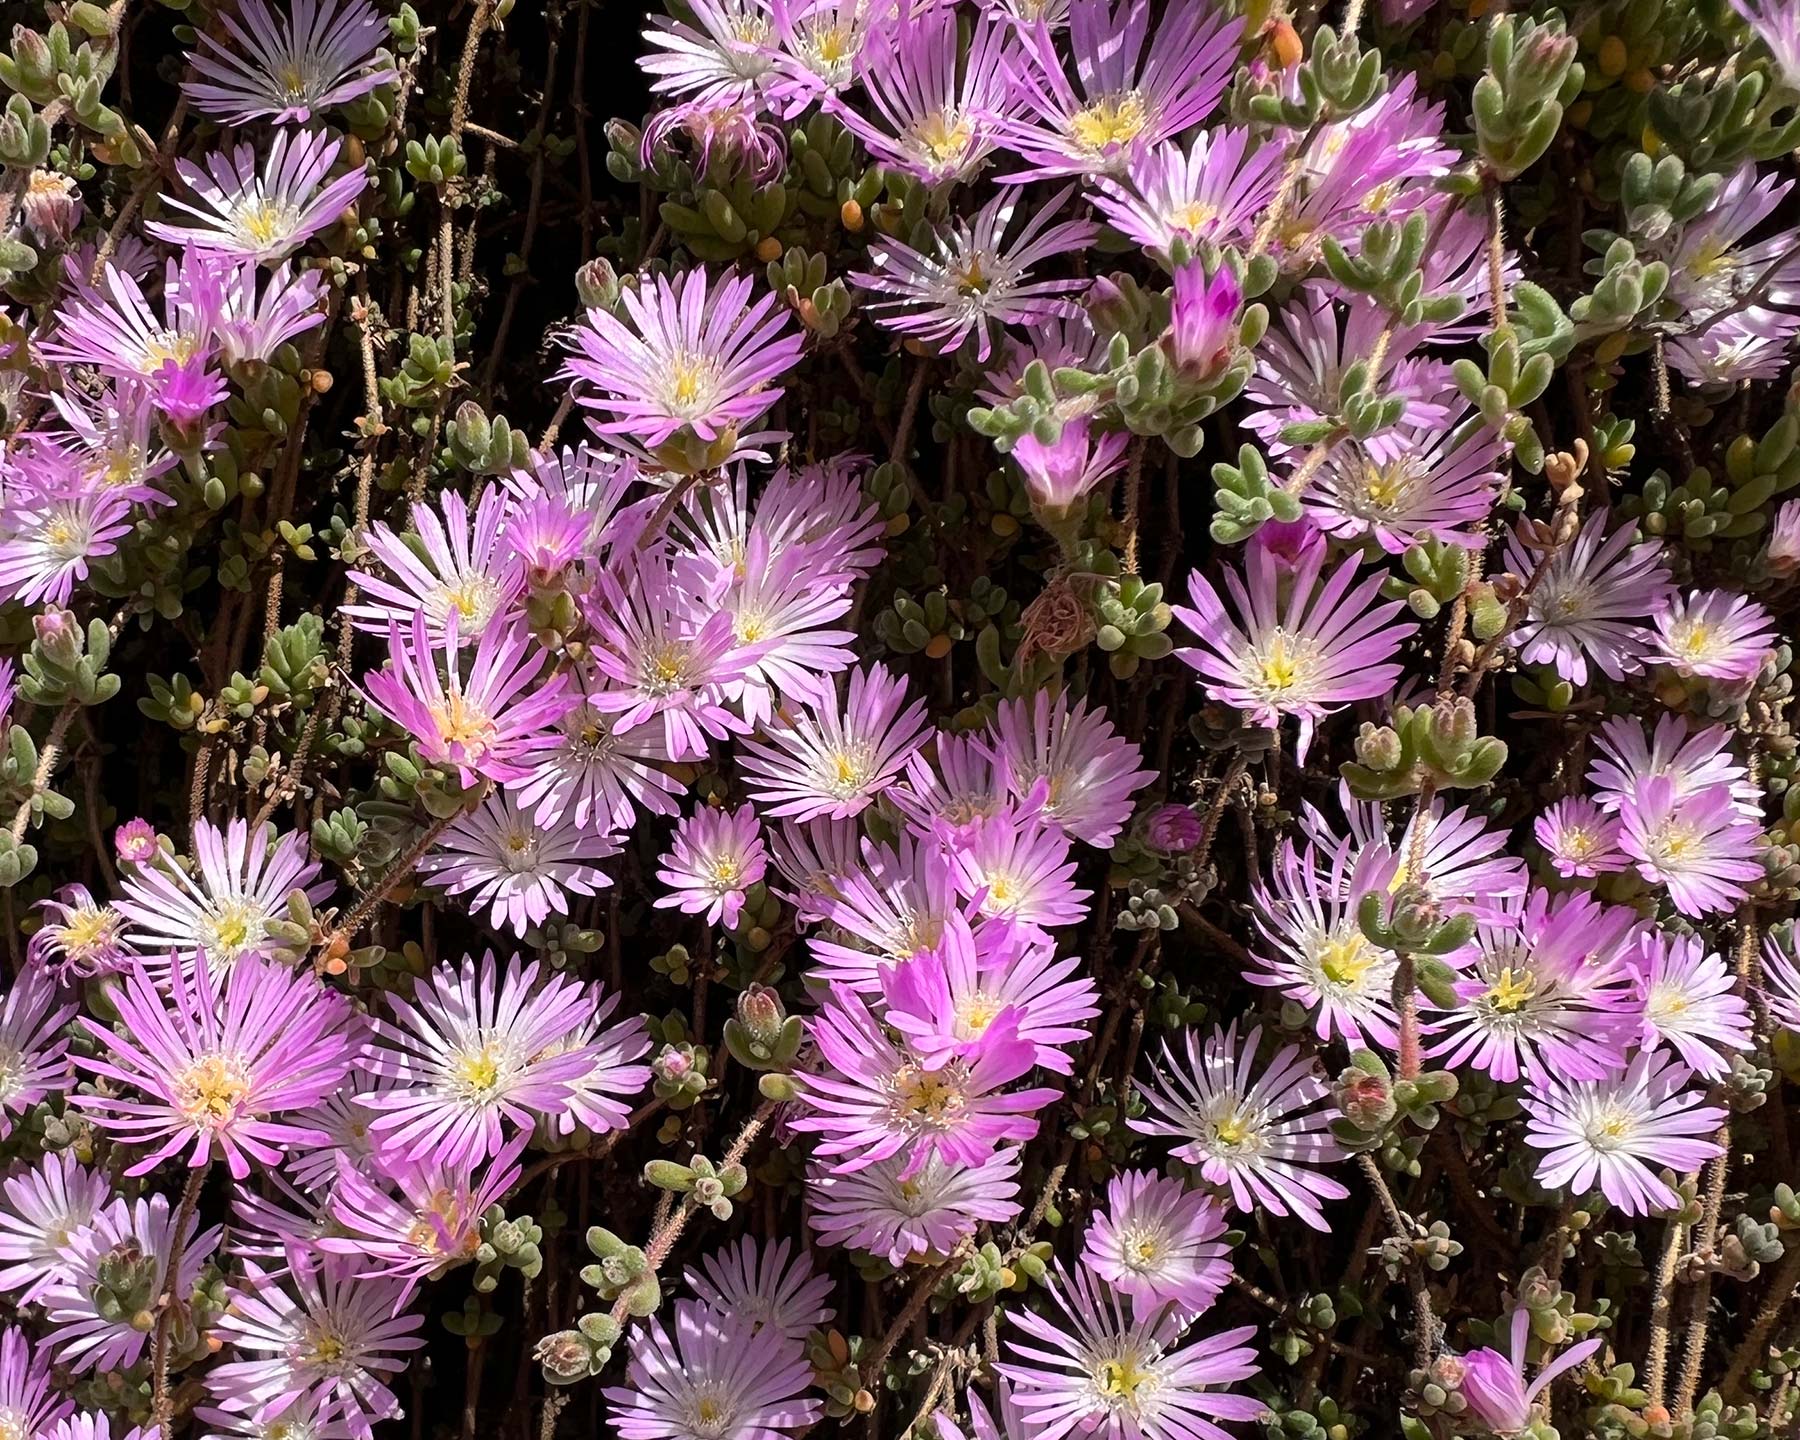 Drosanthemum floribundum syn D. candens - Ice Plant has pink daisy link flowers